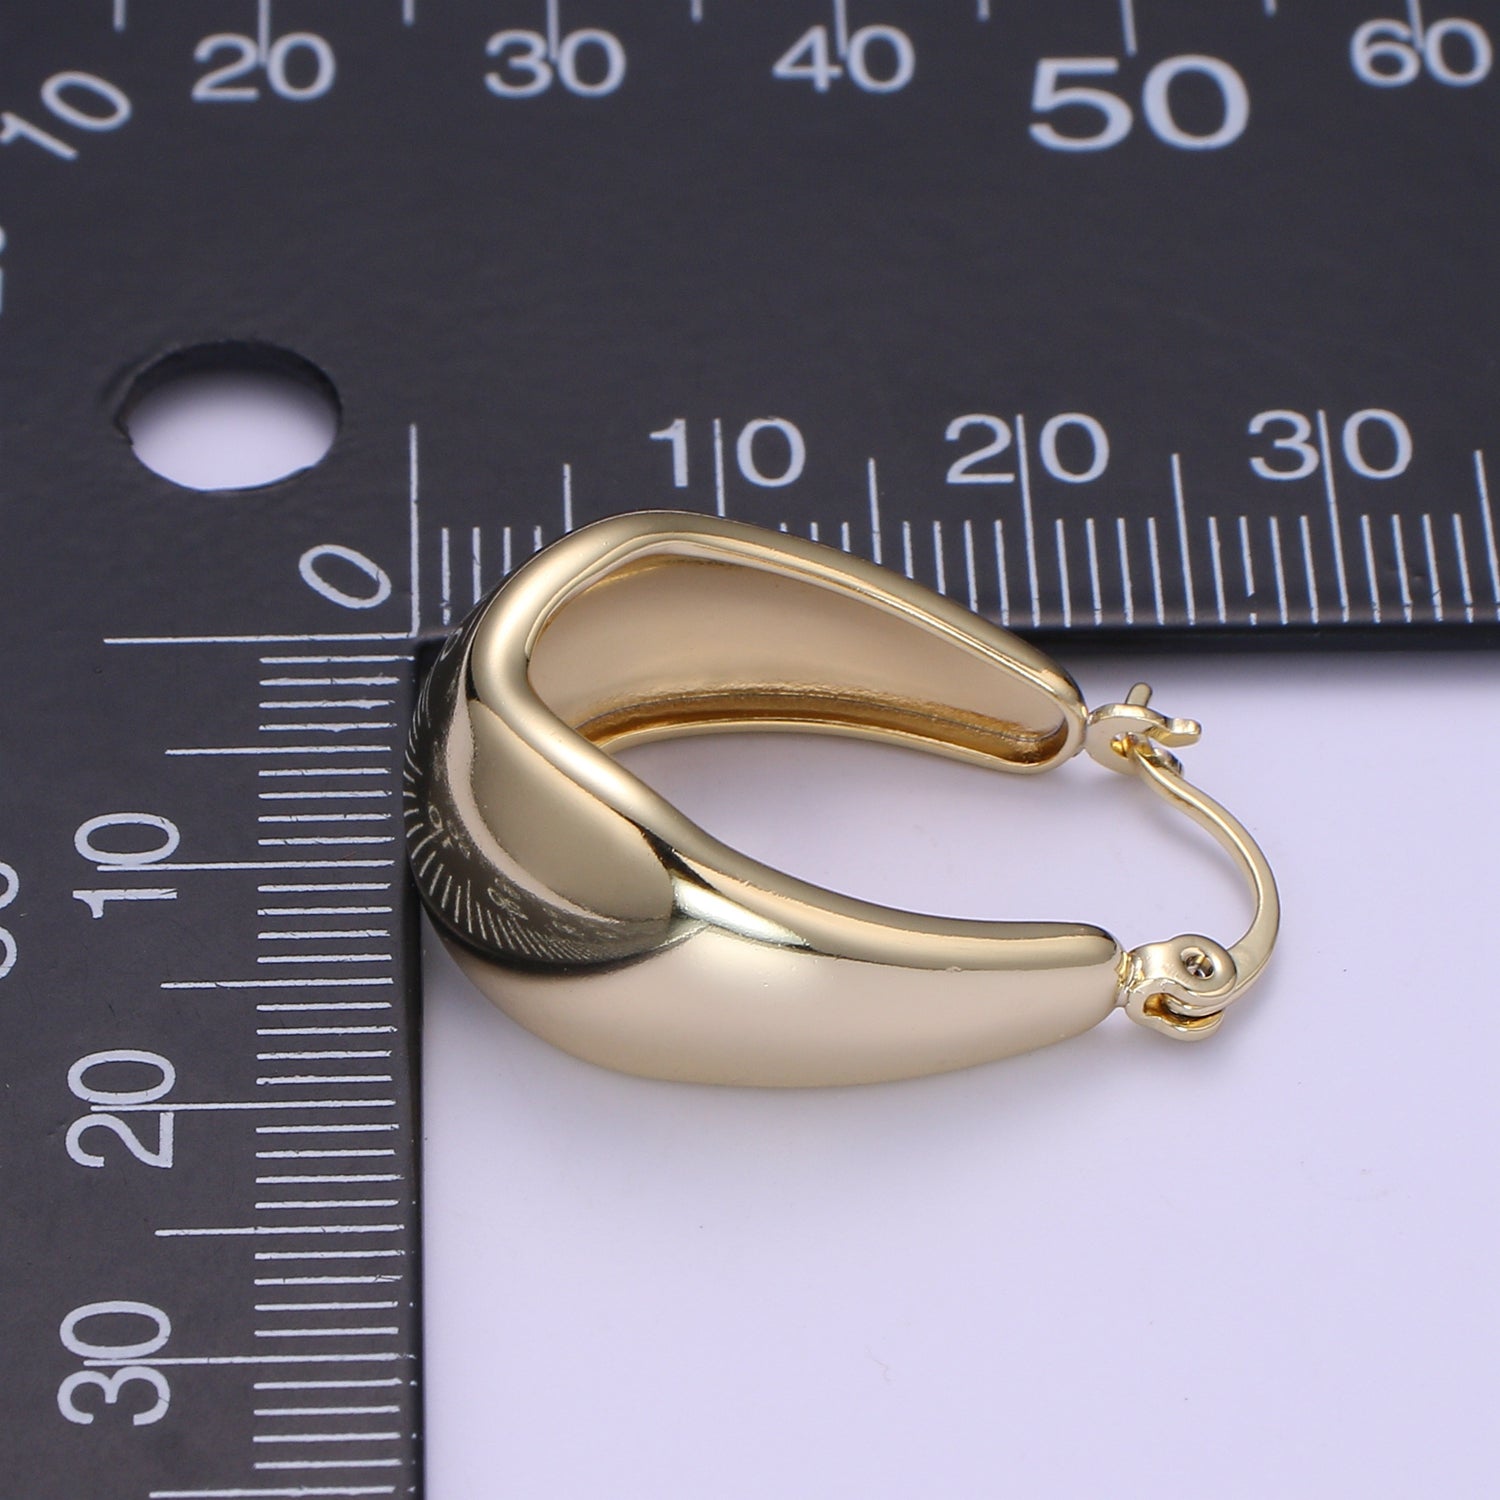 Gold Dome Earrings Hypoallergenic Lightweight Chunky Gold Hoop Earrings - Thick Chunky Hoops - Chubby Hoop Earrings Statement Earring - DLUXCA